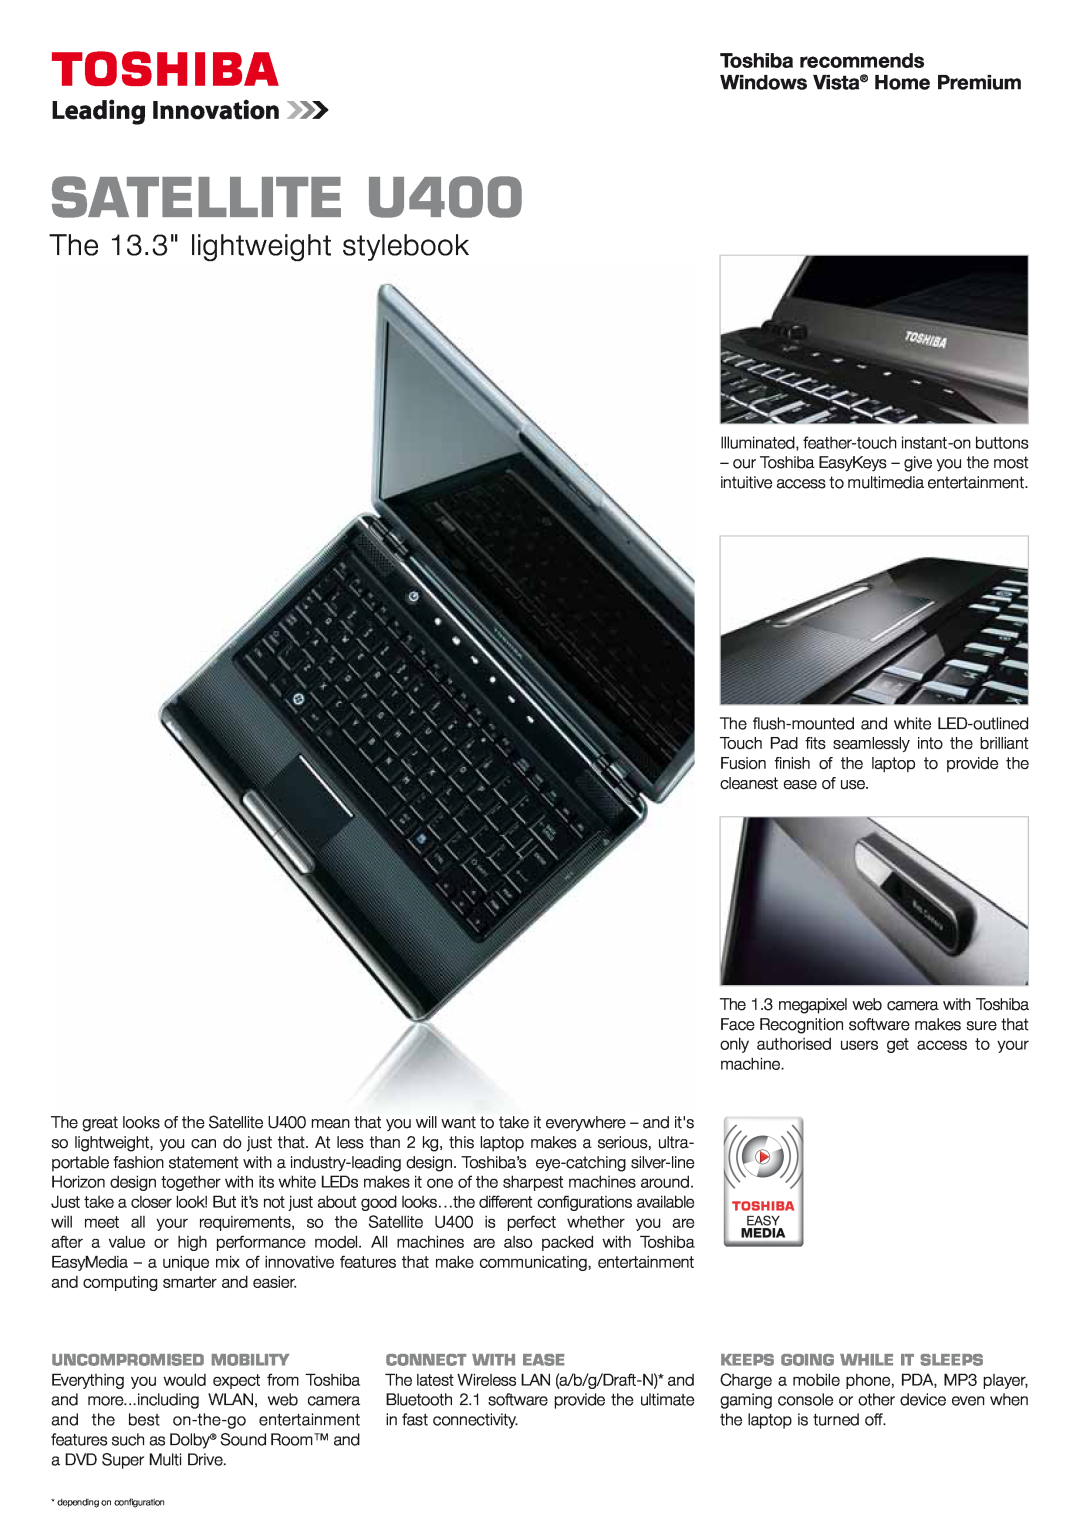 Belkin satellite U400 manual Toshiba recommends Windows Vista Home Premium, SATELLITE U400, The 13.3 lightweight stylebook 